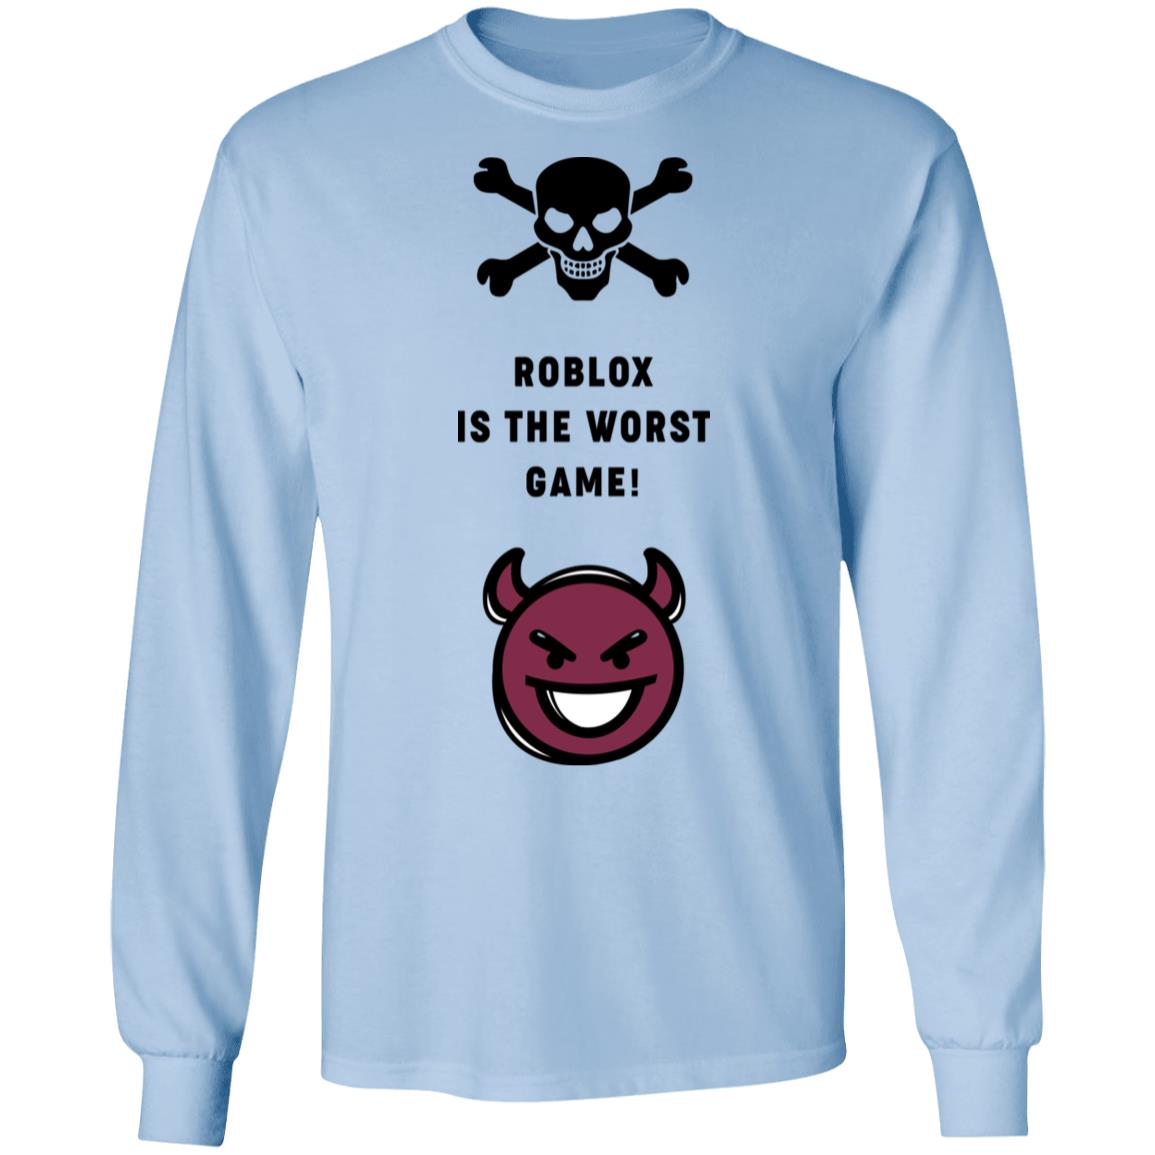 T-shirt roblox in 2021, Roblox t shirts, T shirt png, Roblox shirt